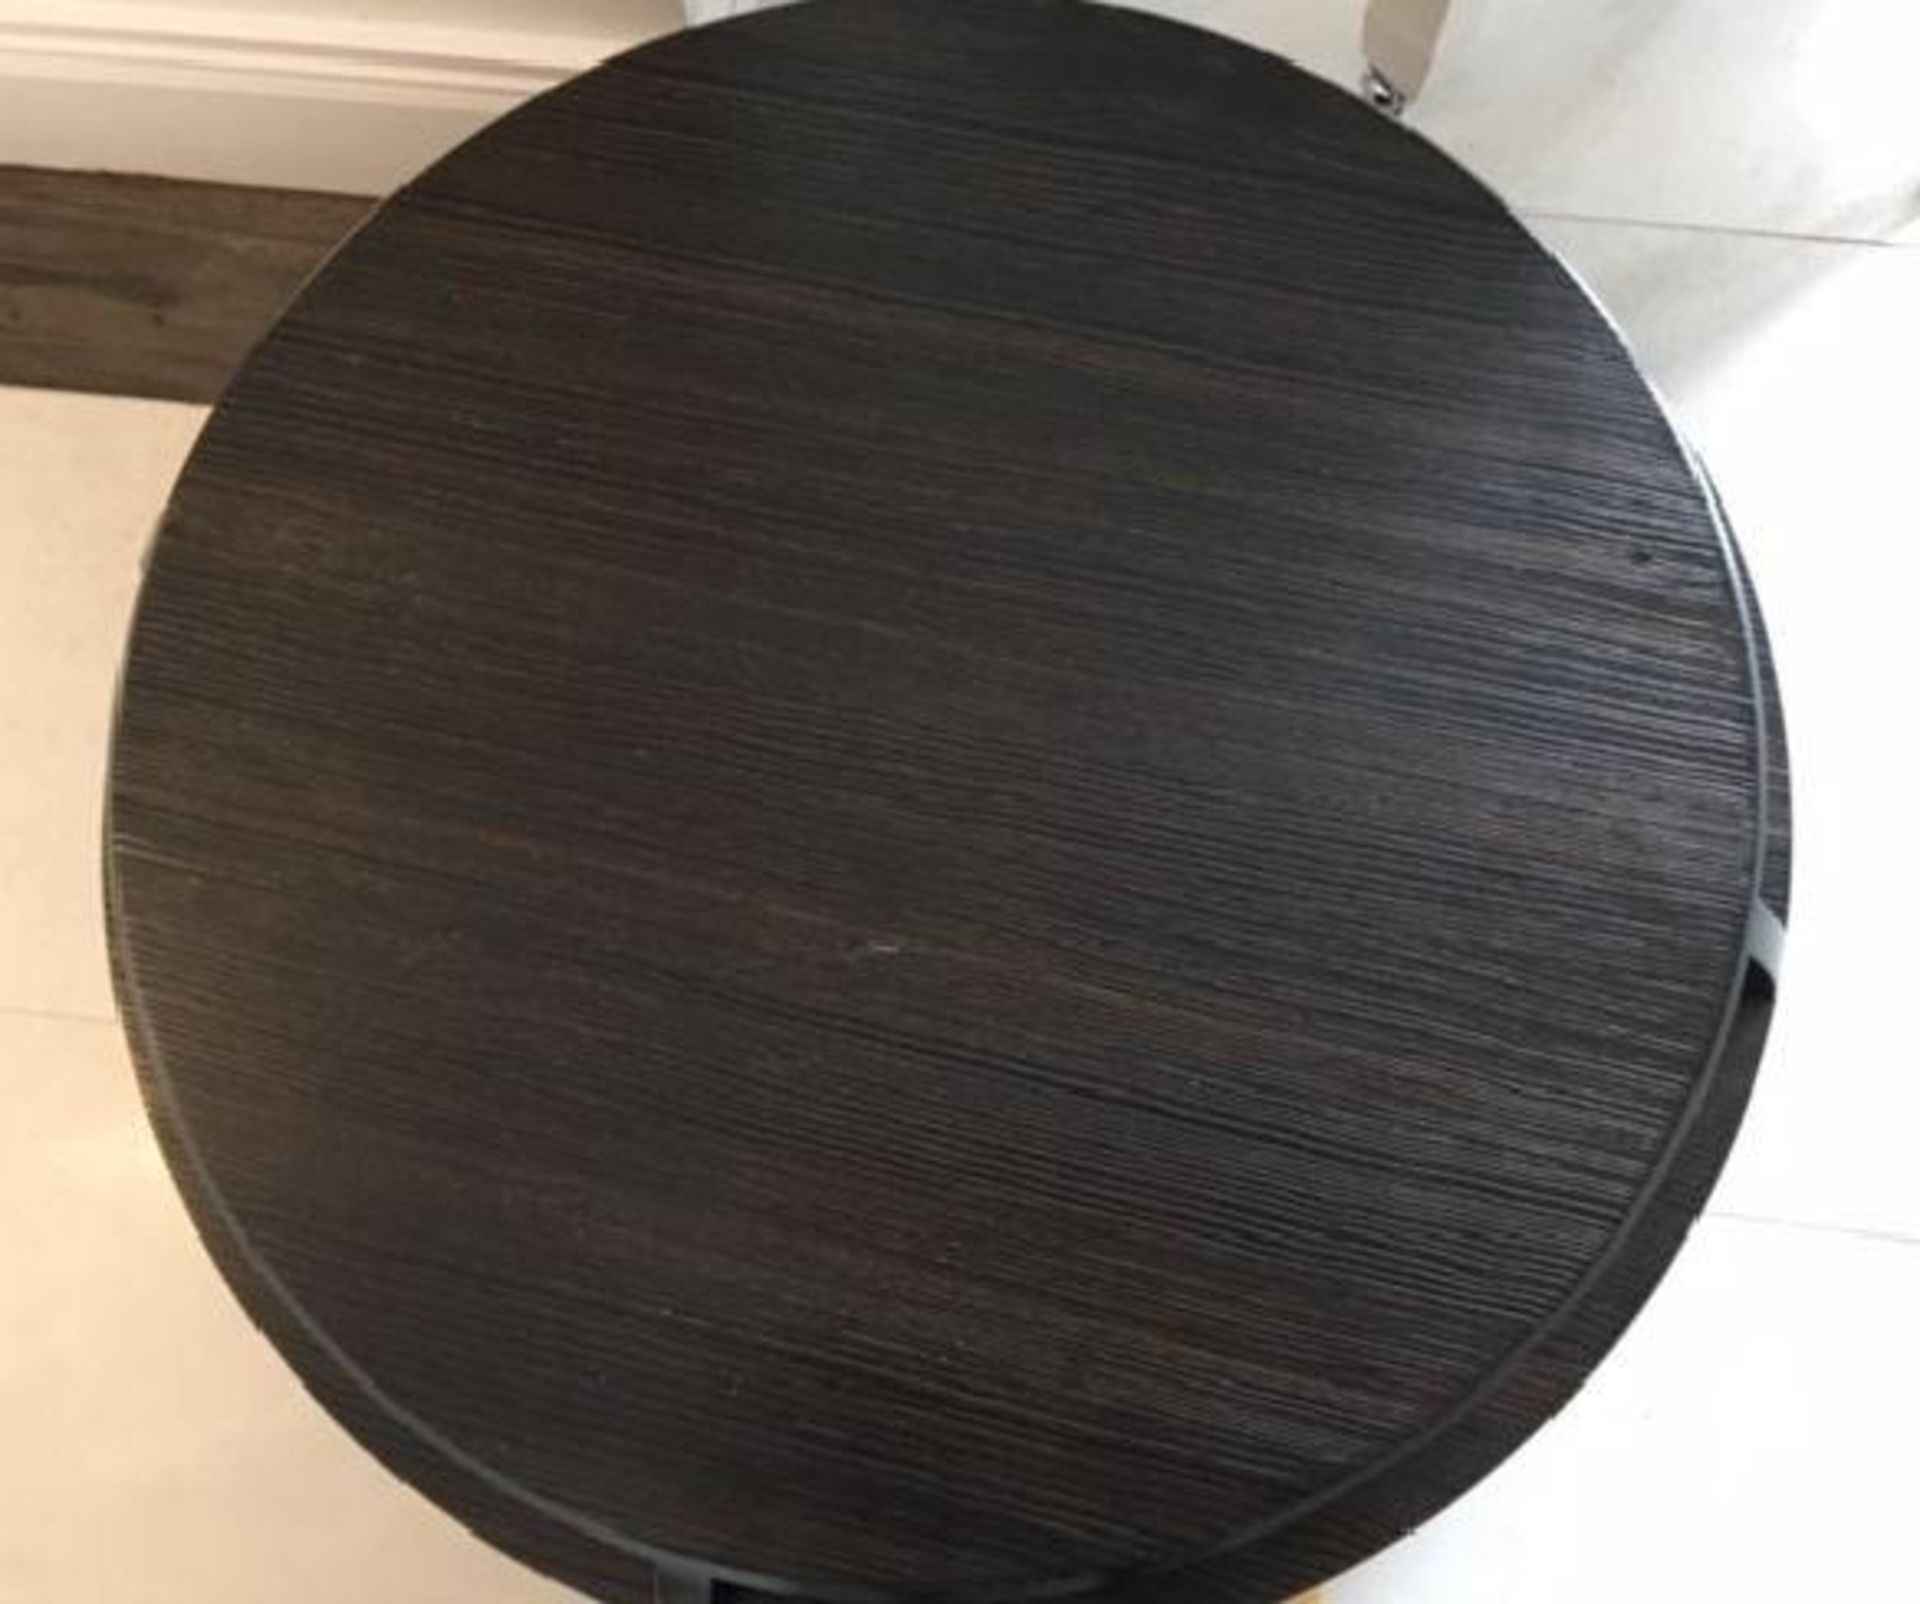 1 x Natuzzi Edgar Table in Black Pine Relief Veneer- CL187 - Location: Altrincham WA14 - Image 3 of 3